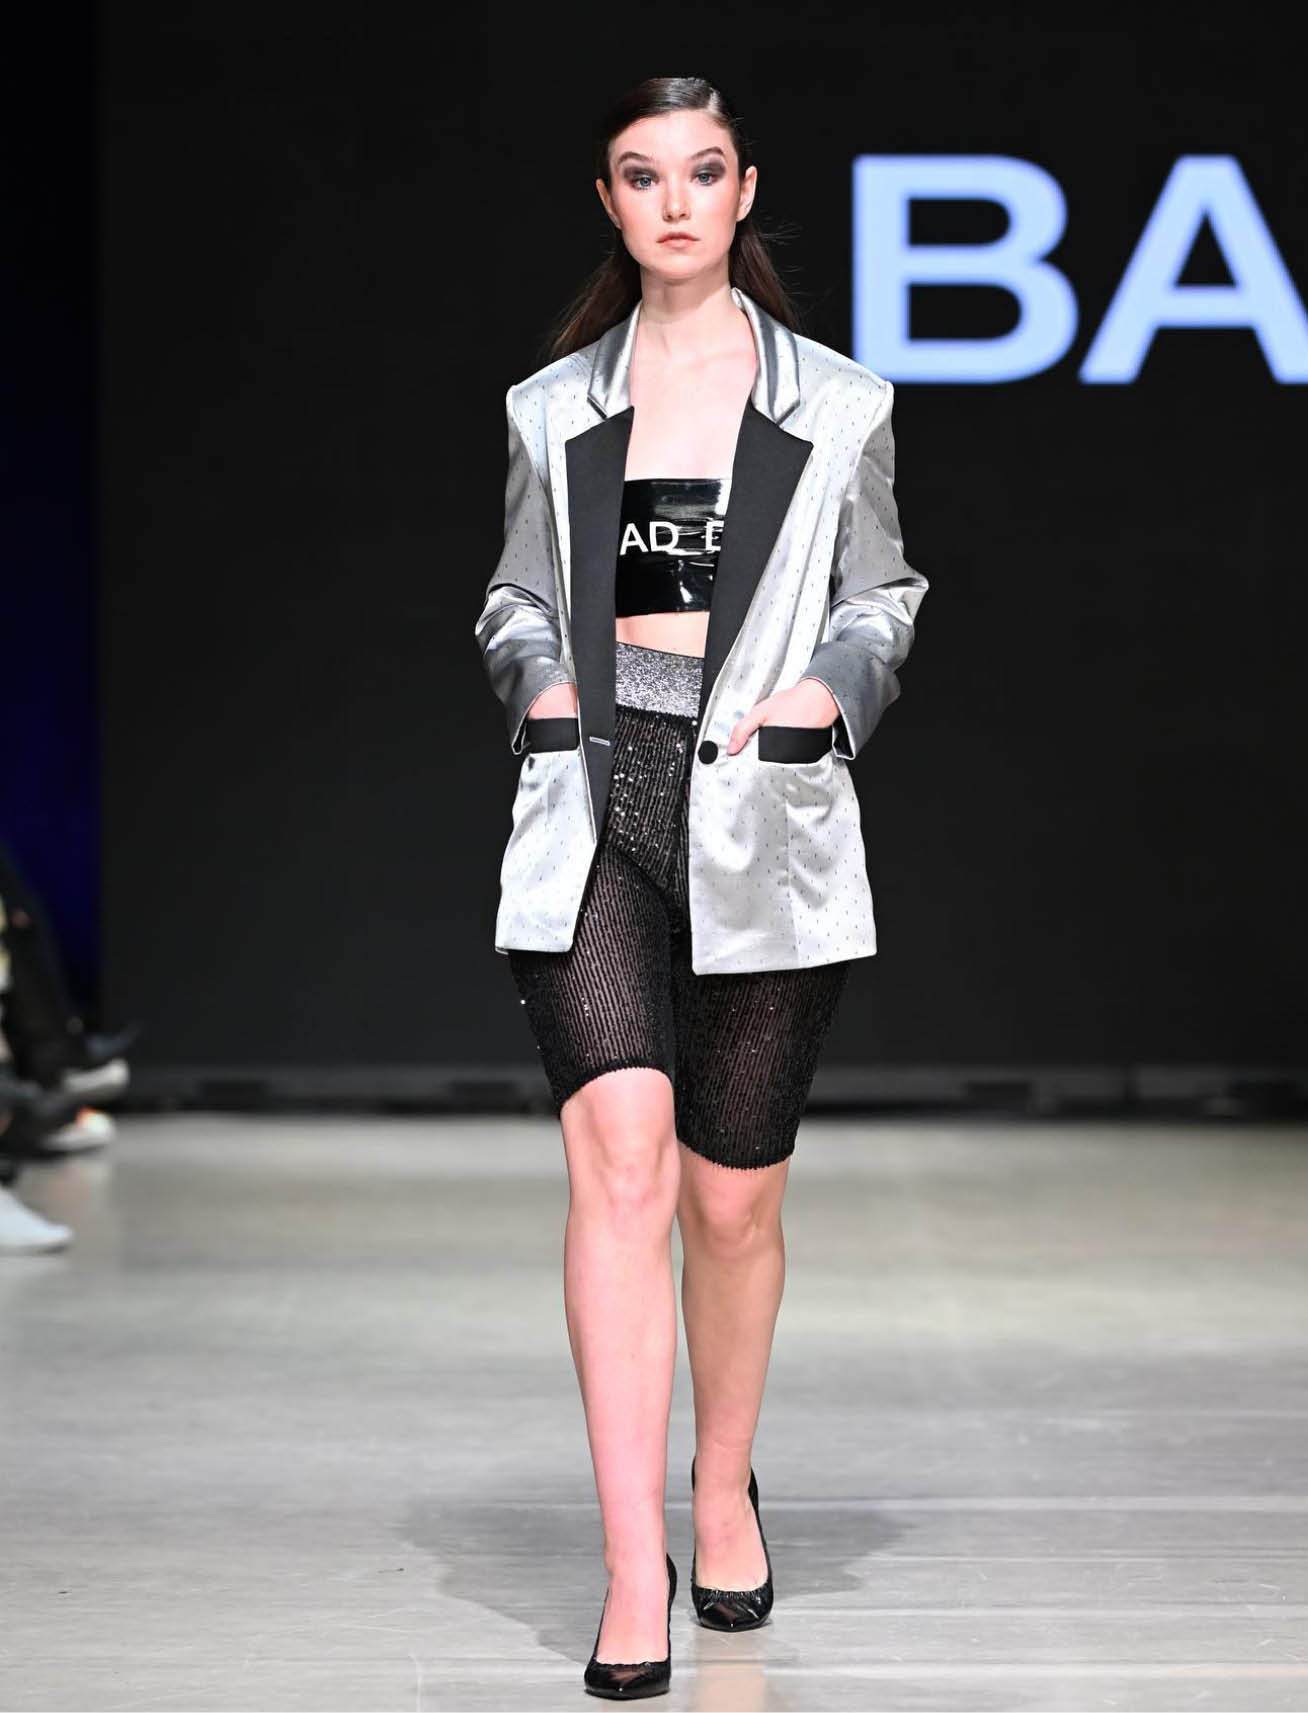 Pant and crop top by Blanche Macdonald Fashion Design Graduate Laila Aouinati